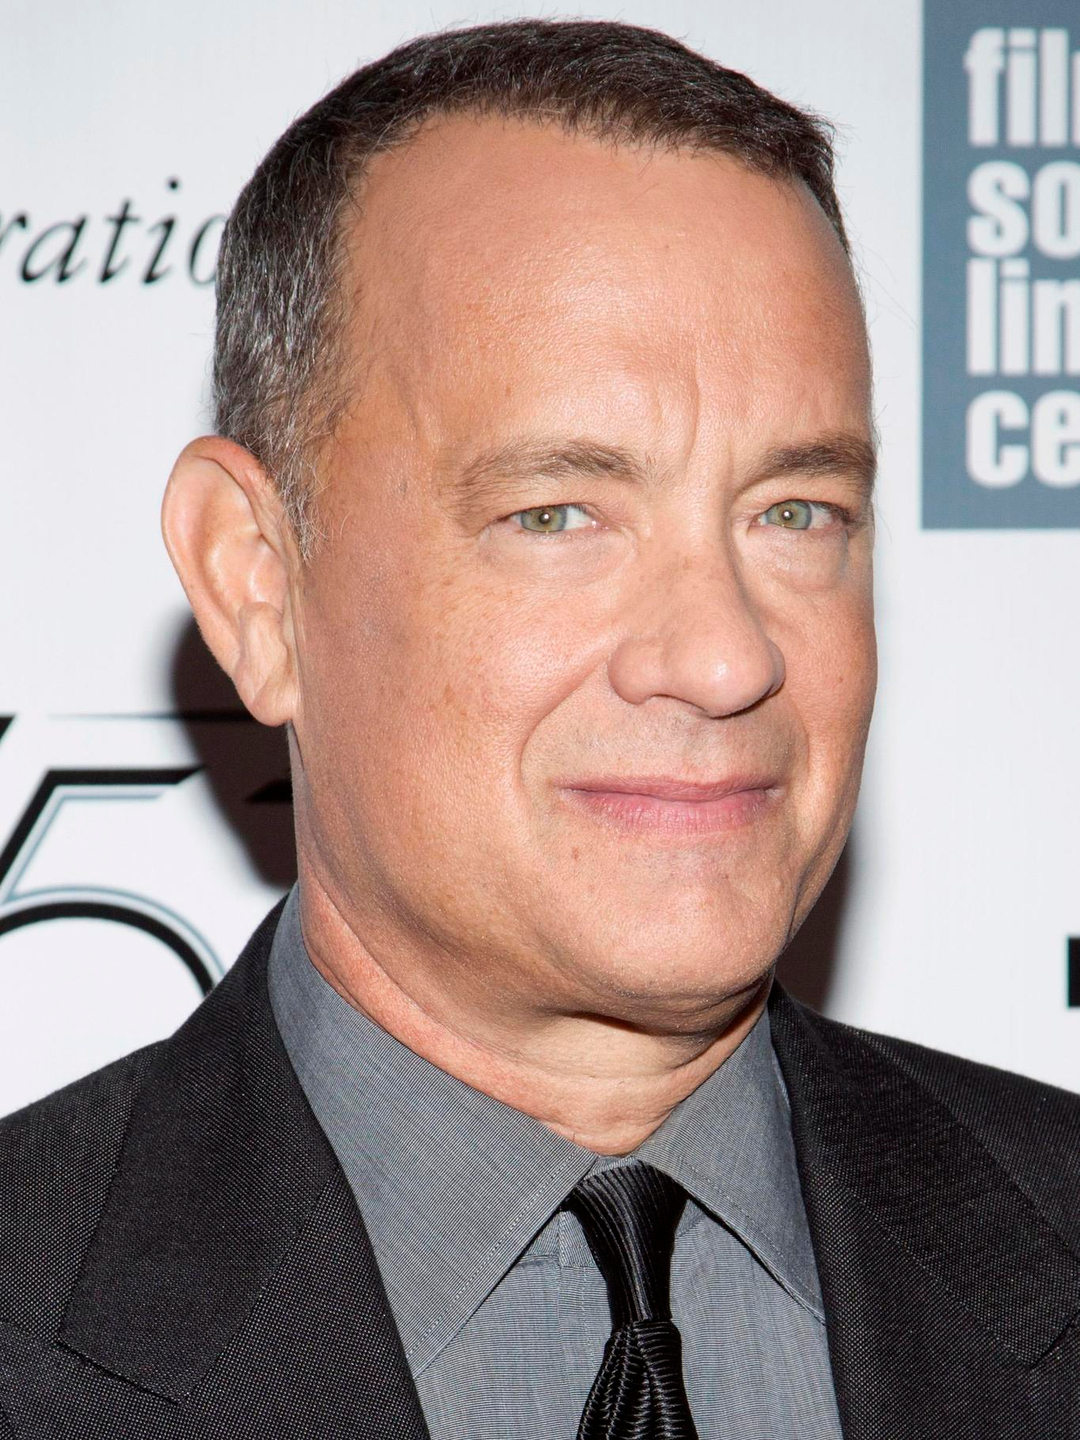 Tom Hanks biography